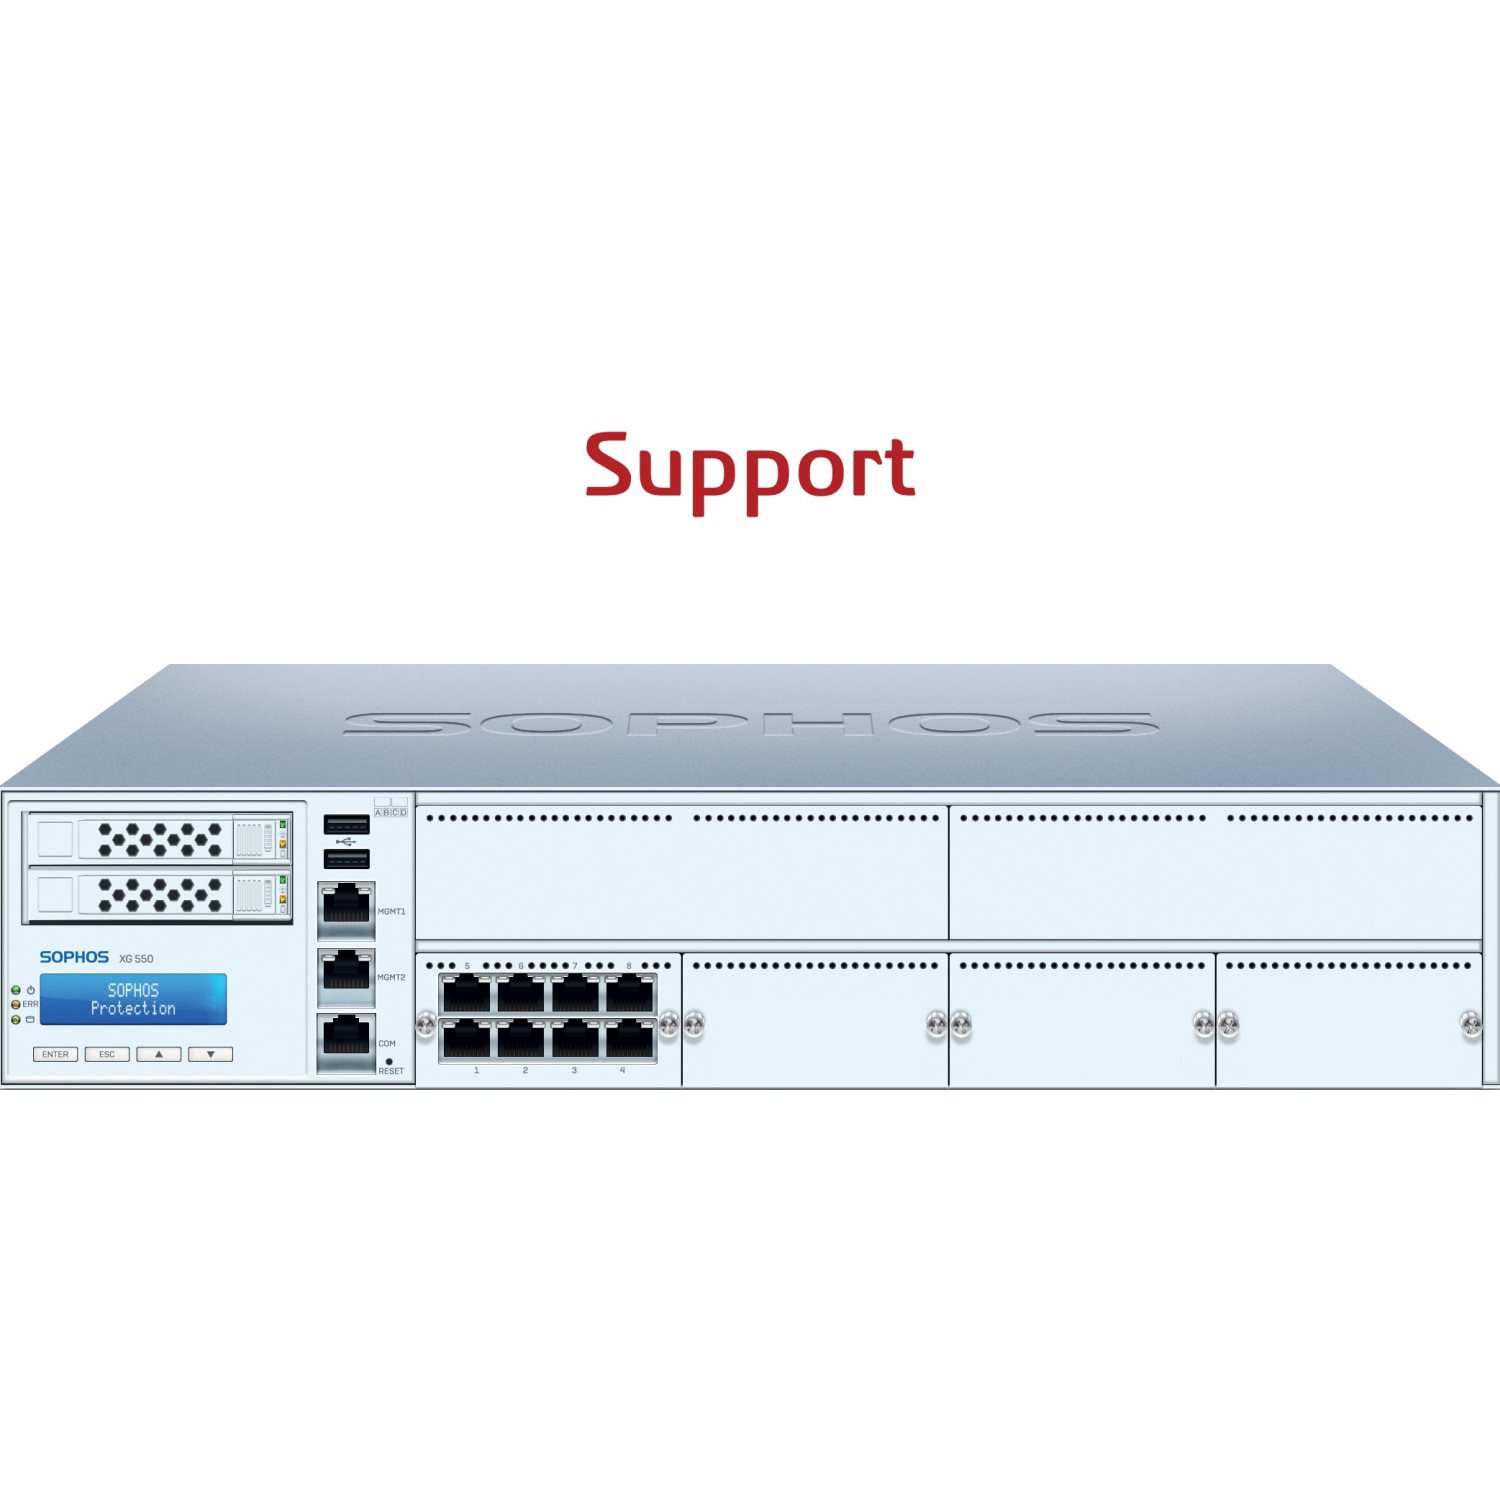  XG / XGS FireWall Support pour Firewall Sophos XG 550